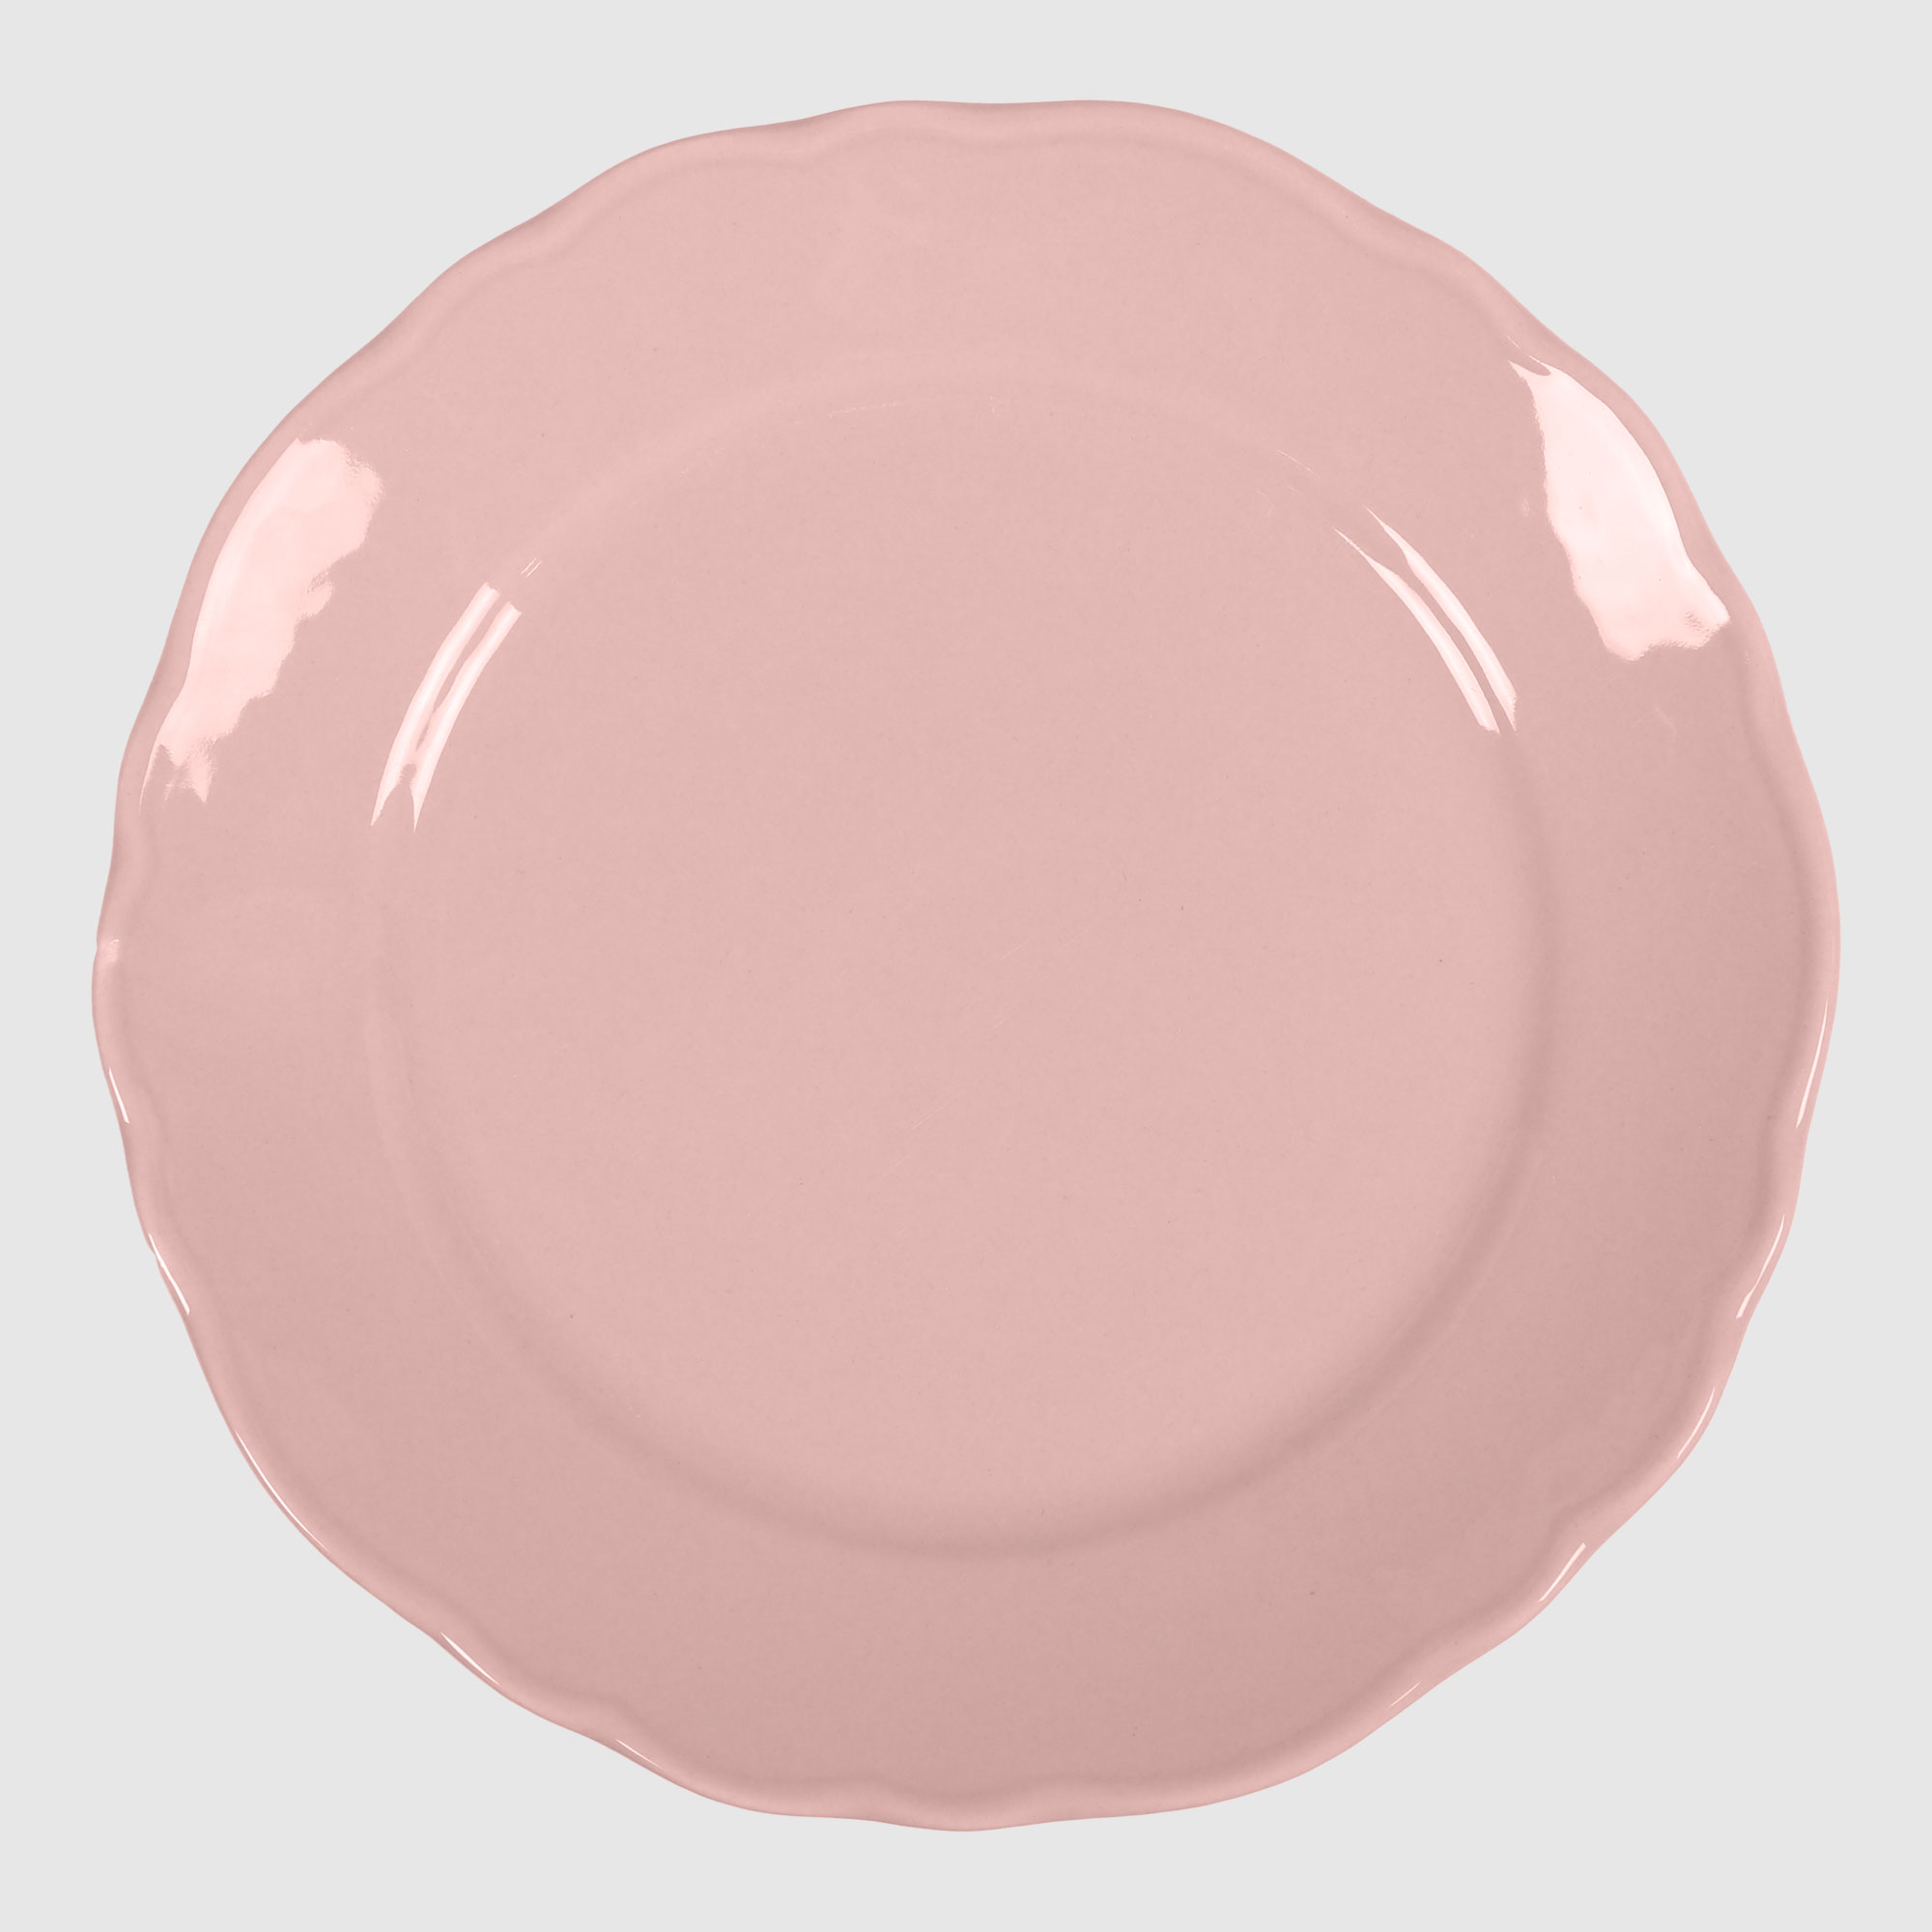 Тарелка Kutahya porselen Lar розовая 19 см тарелка kutahya porselen iron 21 см